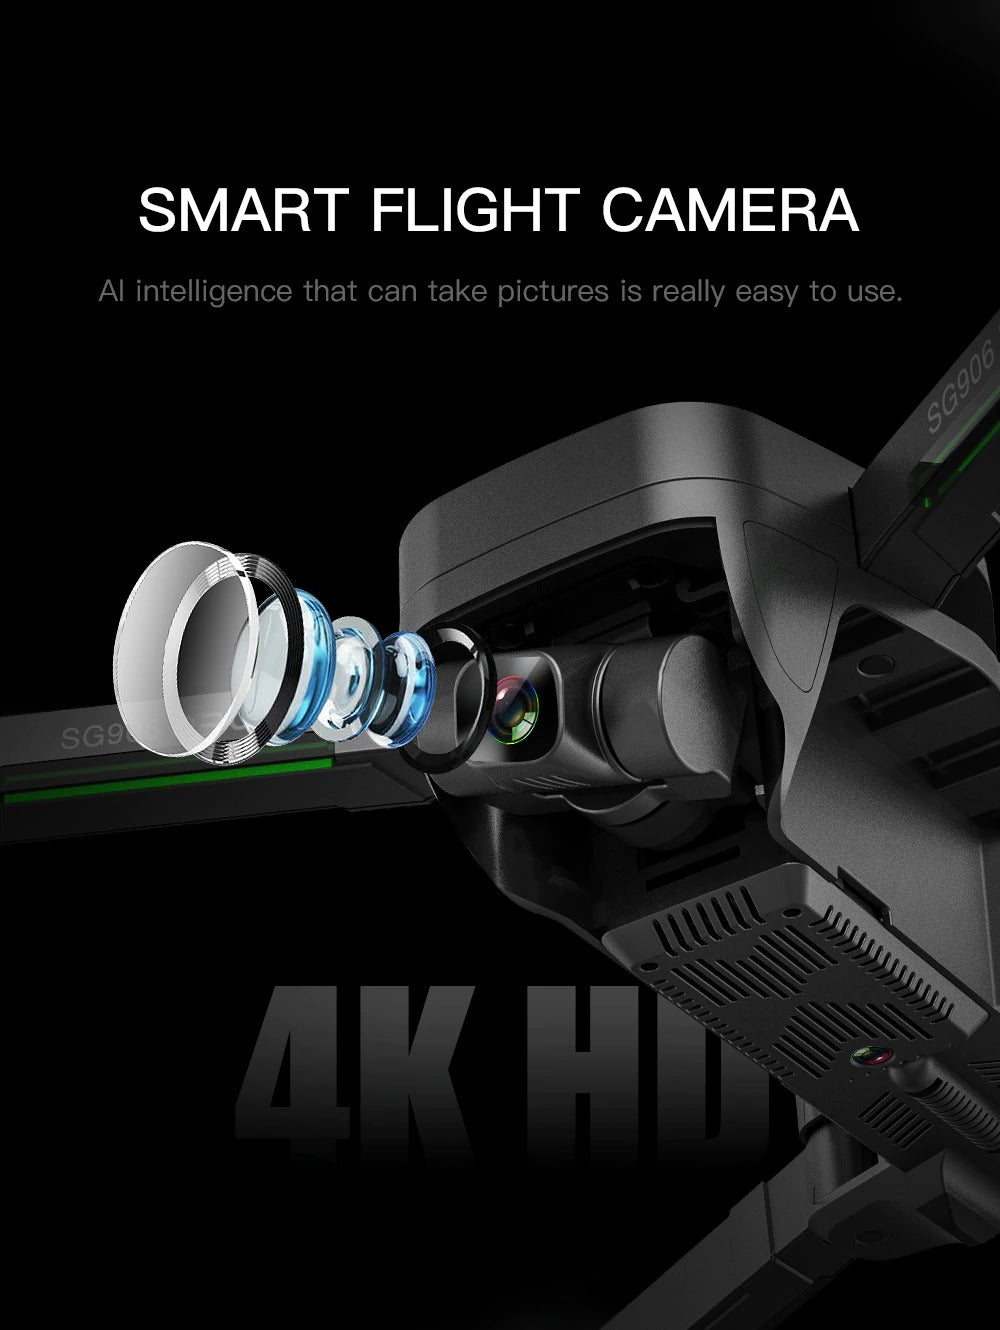 SG906 Pro Beast 2 smart camera